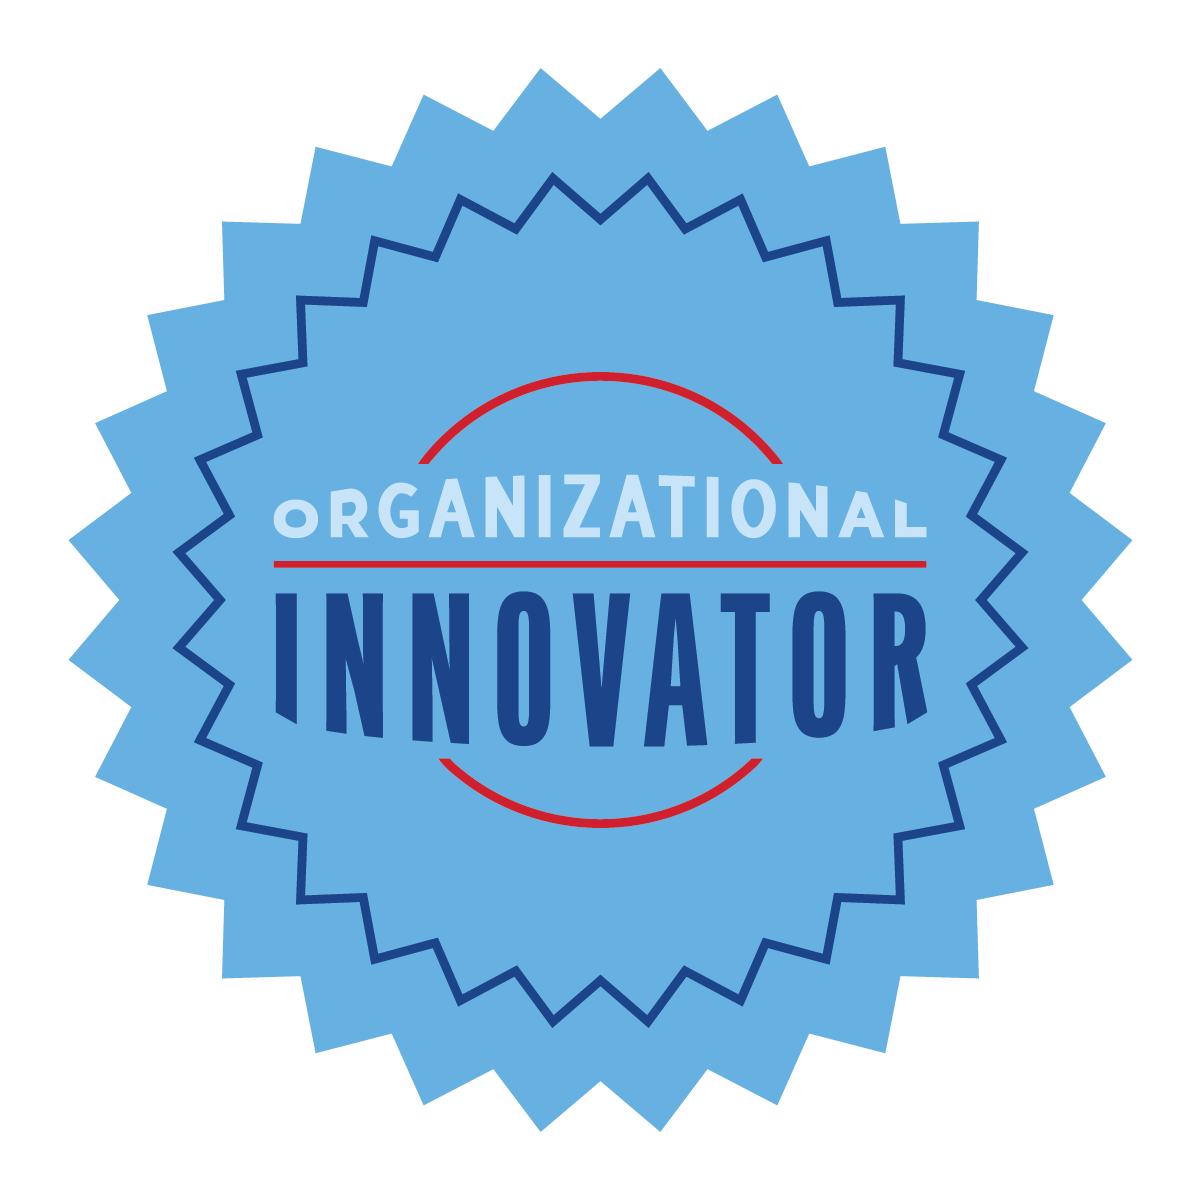 organizational innovator